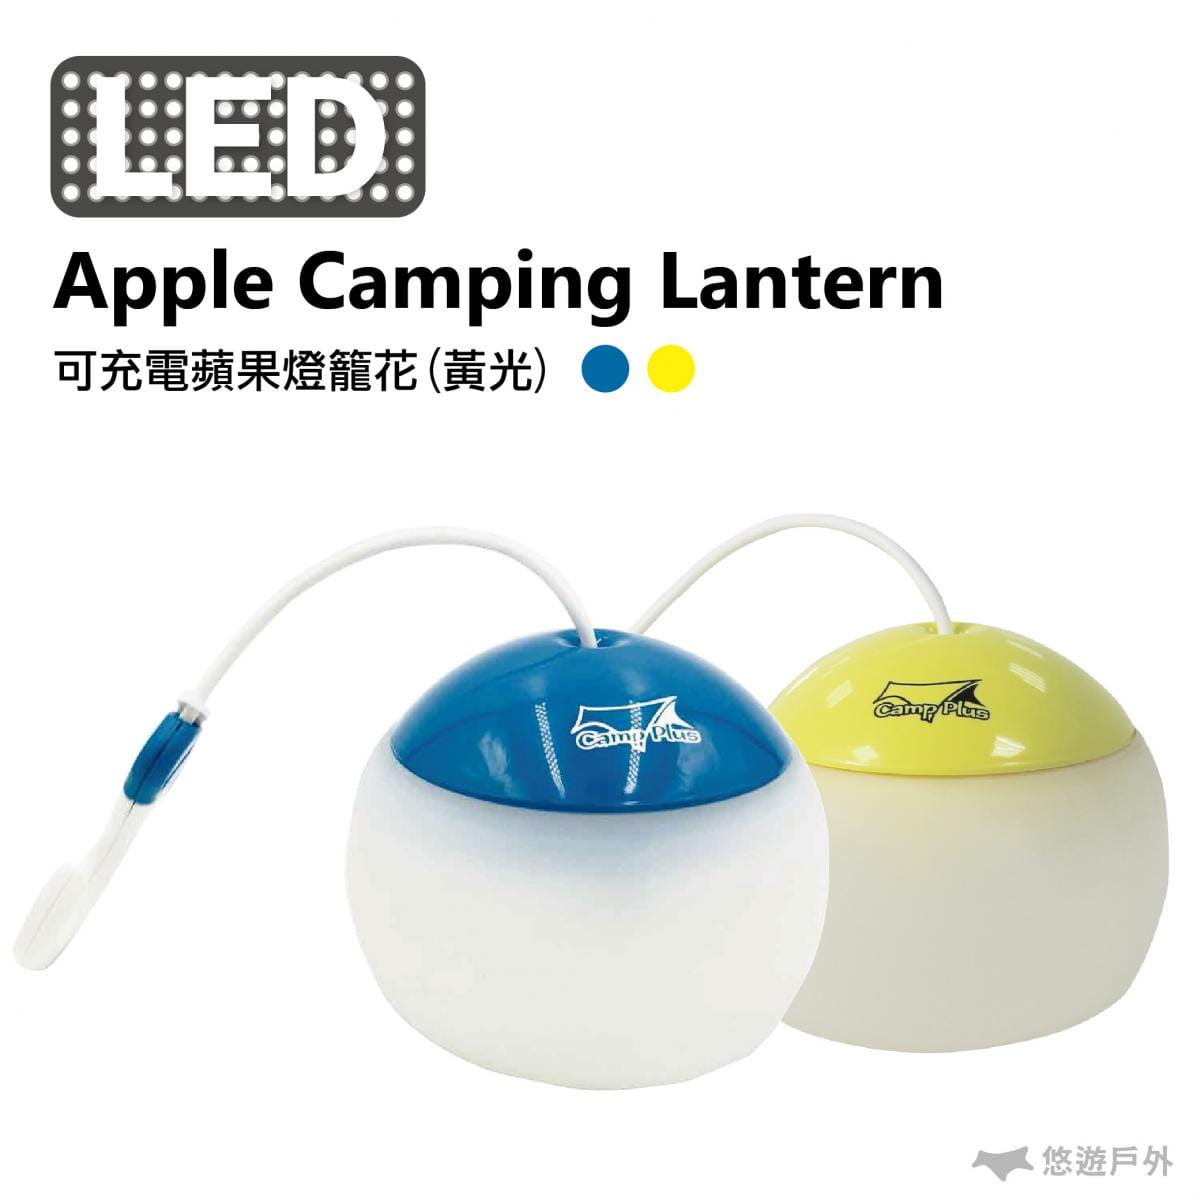 【Camp Plus】【全新上市】第三代 Camp plus 充電式蘋果燈籠花黃光 0